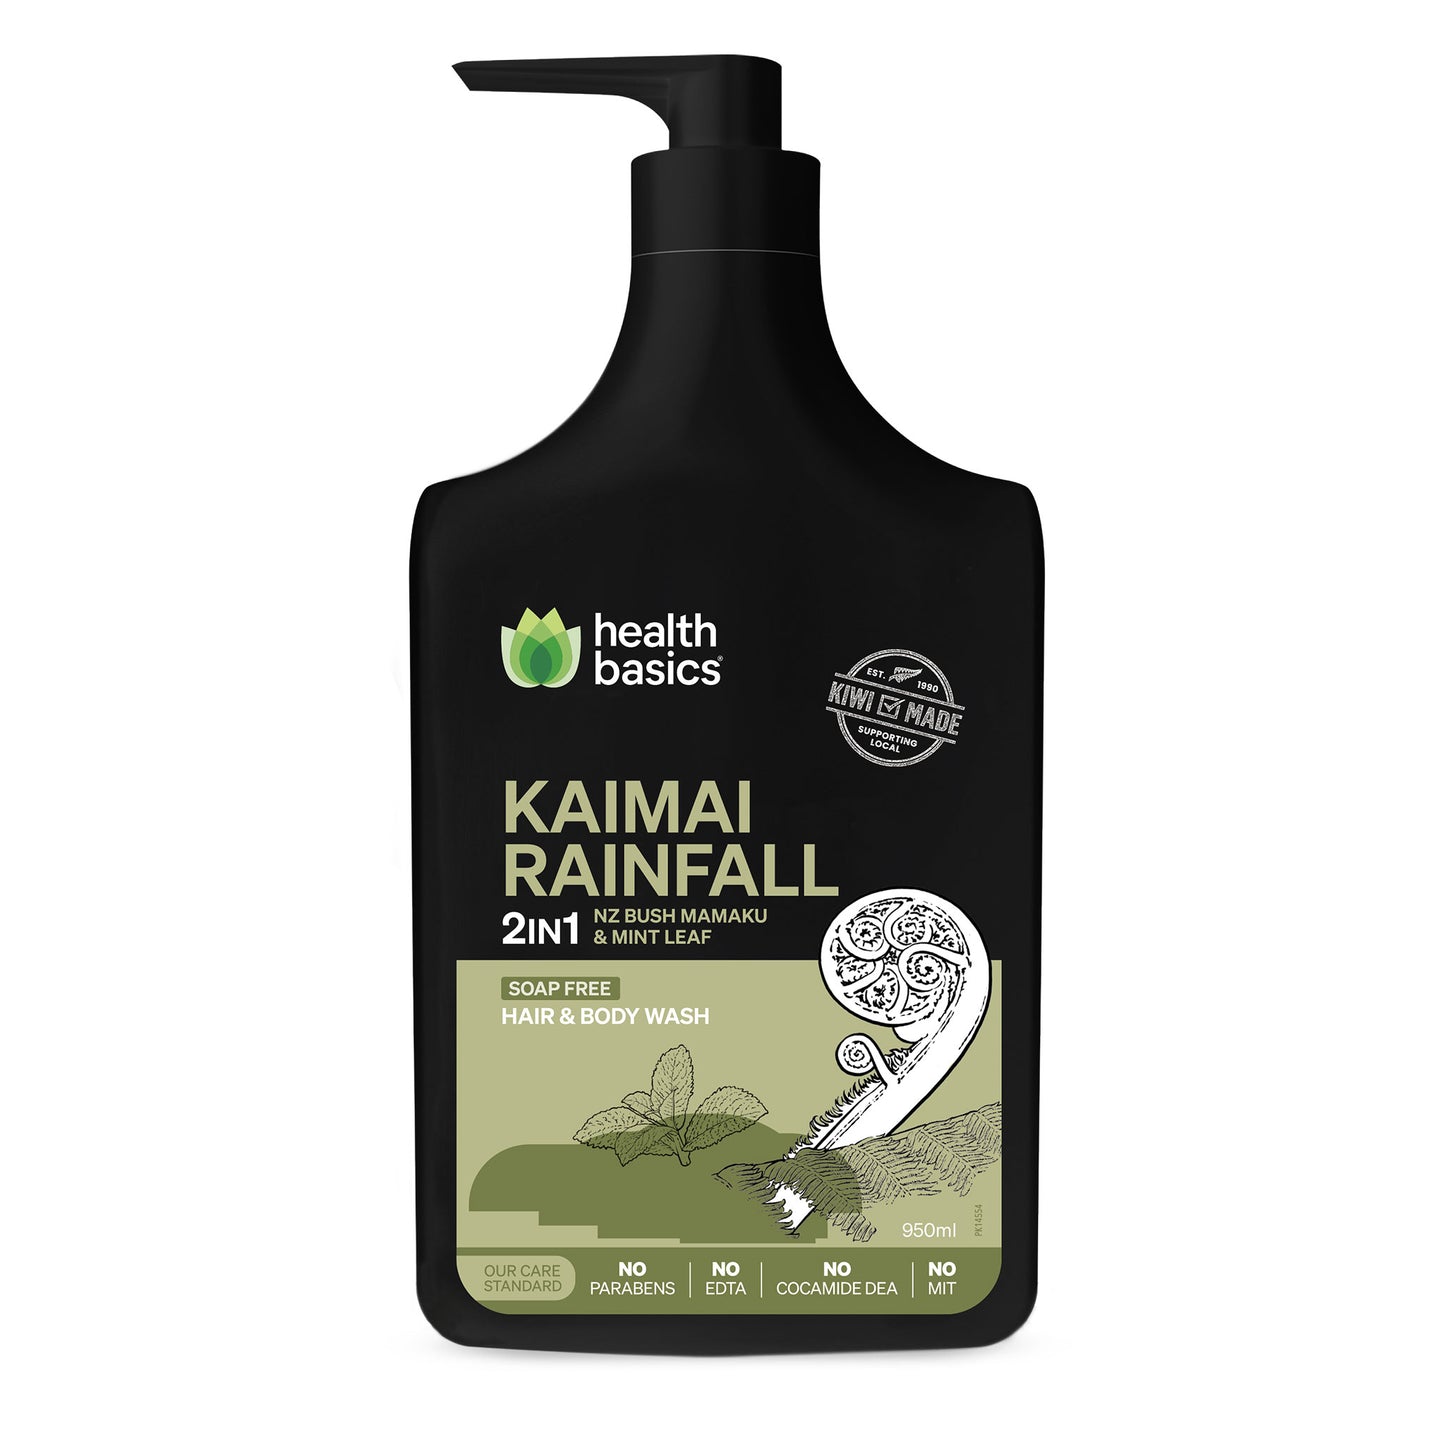 Kaimai Rainfall 2 in 1 Hair & Body Wash 950mL